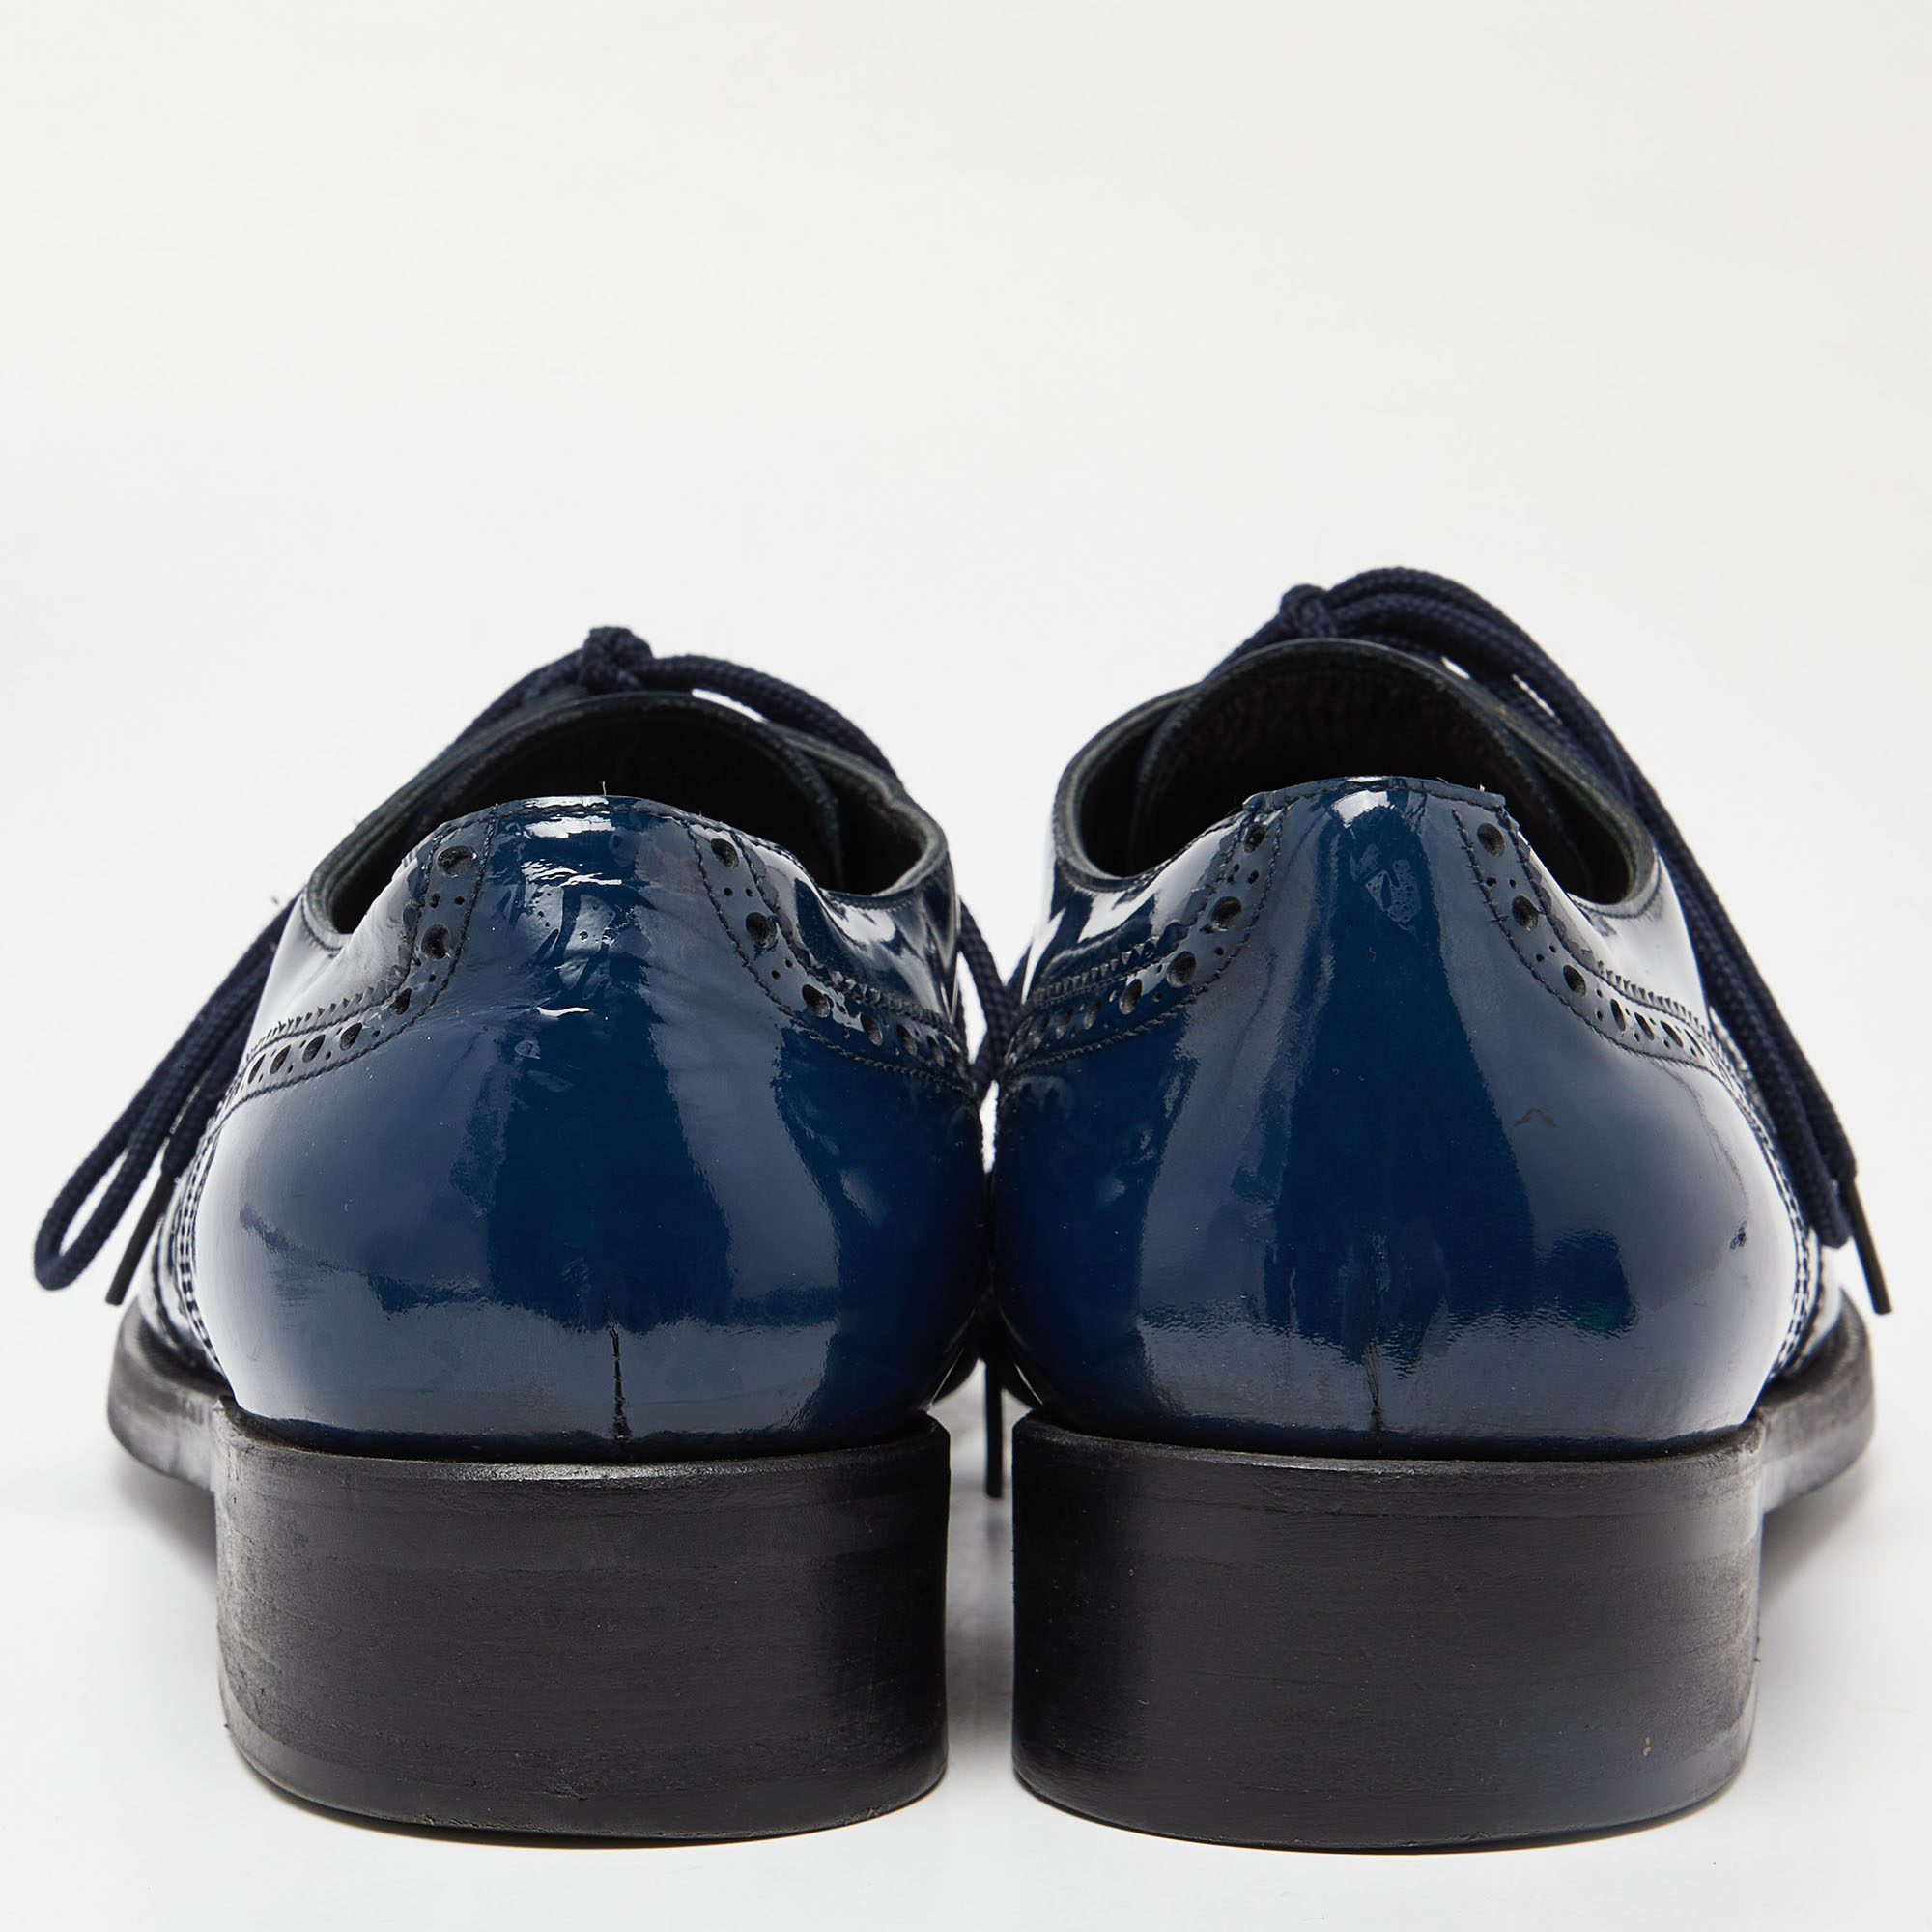 Dolce & Gabbana Blue Leather Brogue Derby Oxford Size 44